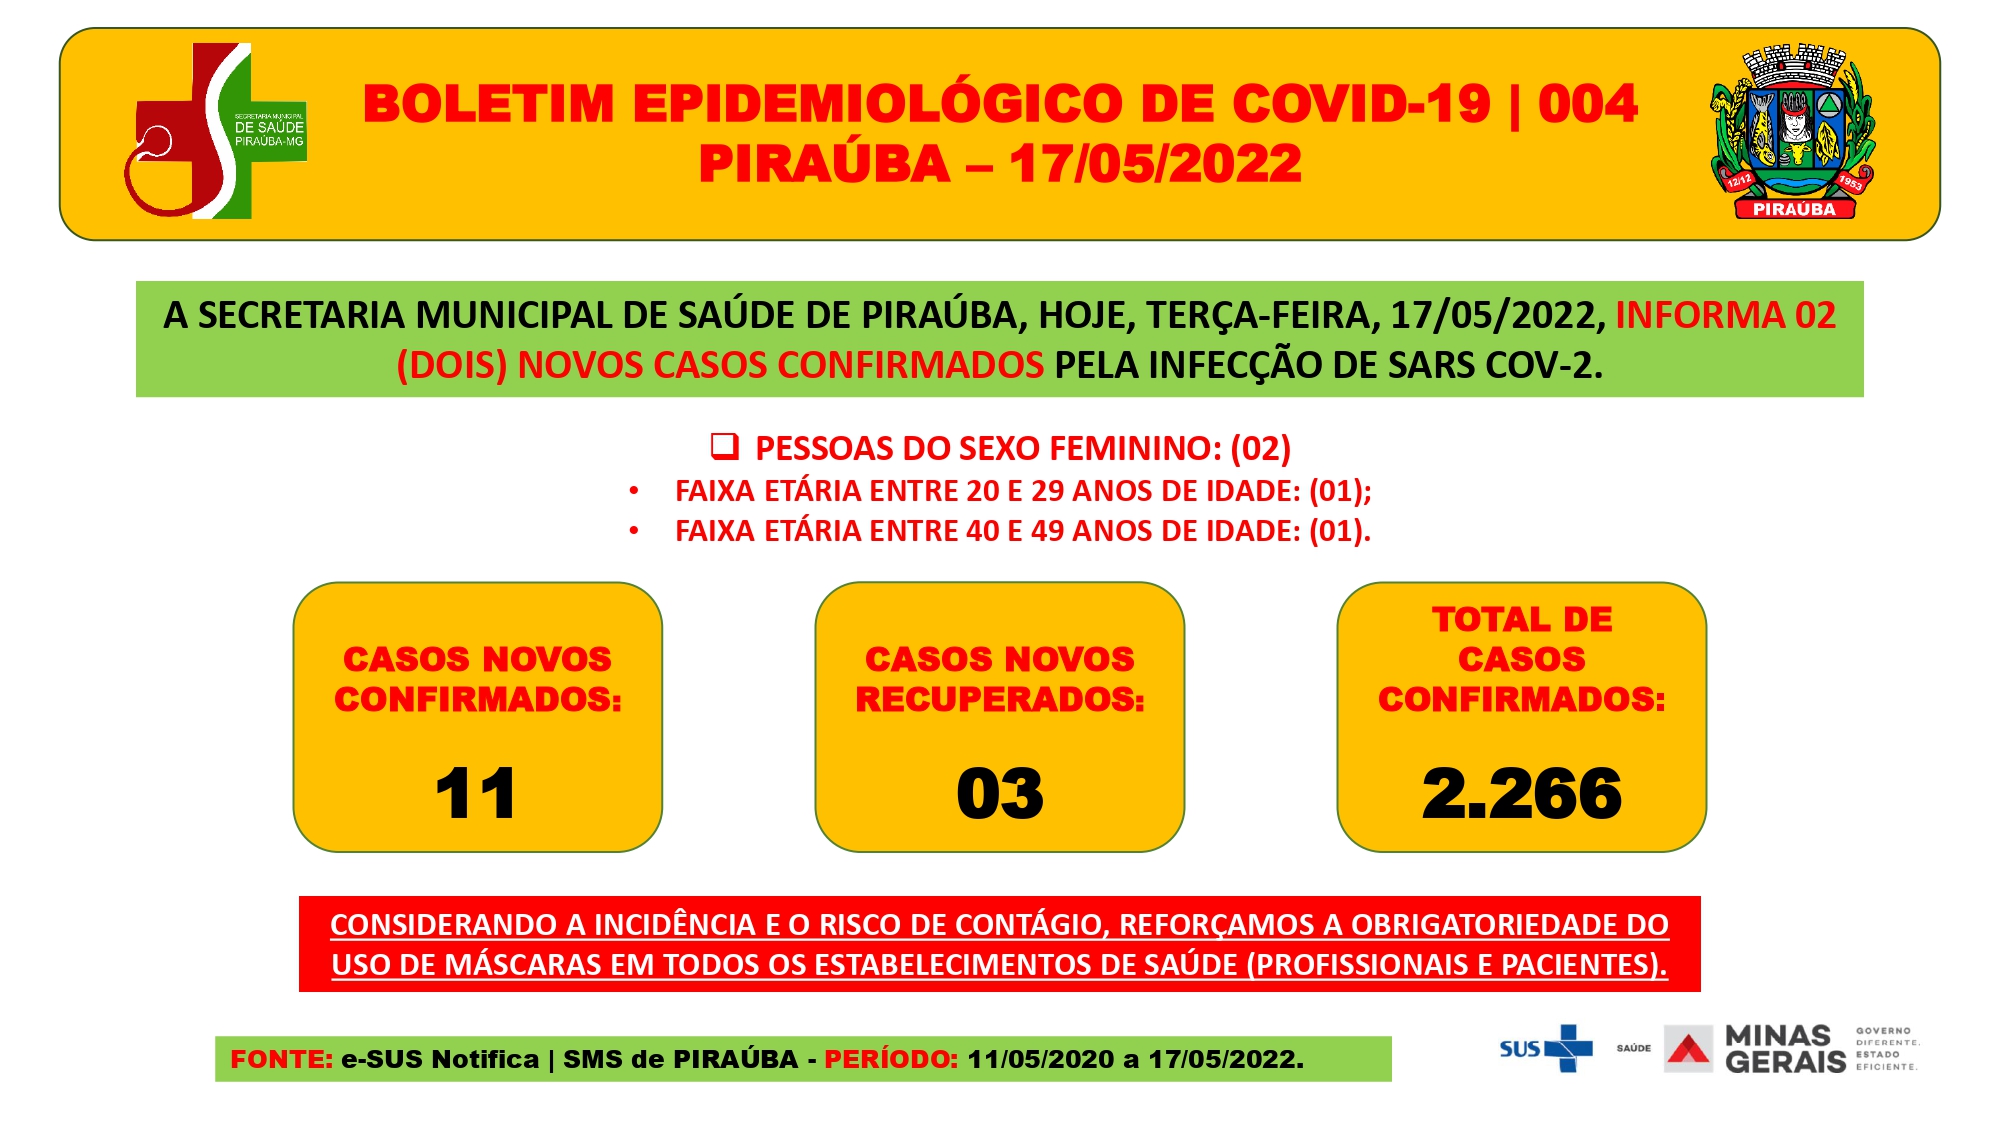 BOLETIM EPIDEMIOLÓGICO DE COVID-19 (17/05/2022)